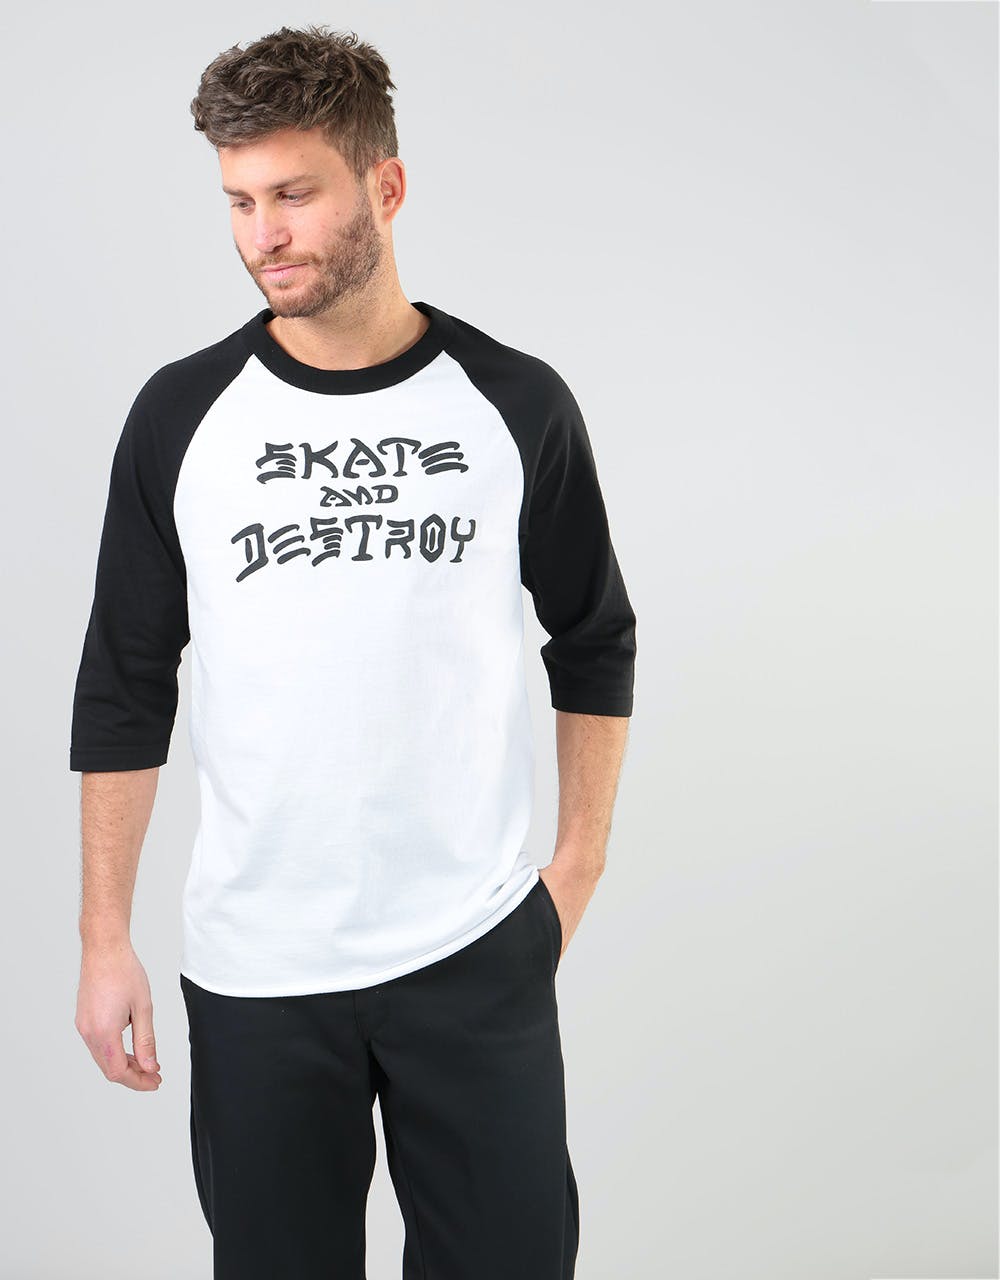 Thrasher Skate and Destroy Raglan T-Shirt - White/Black